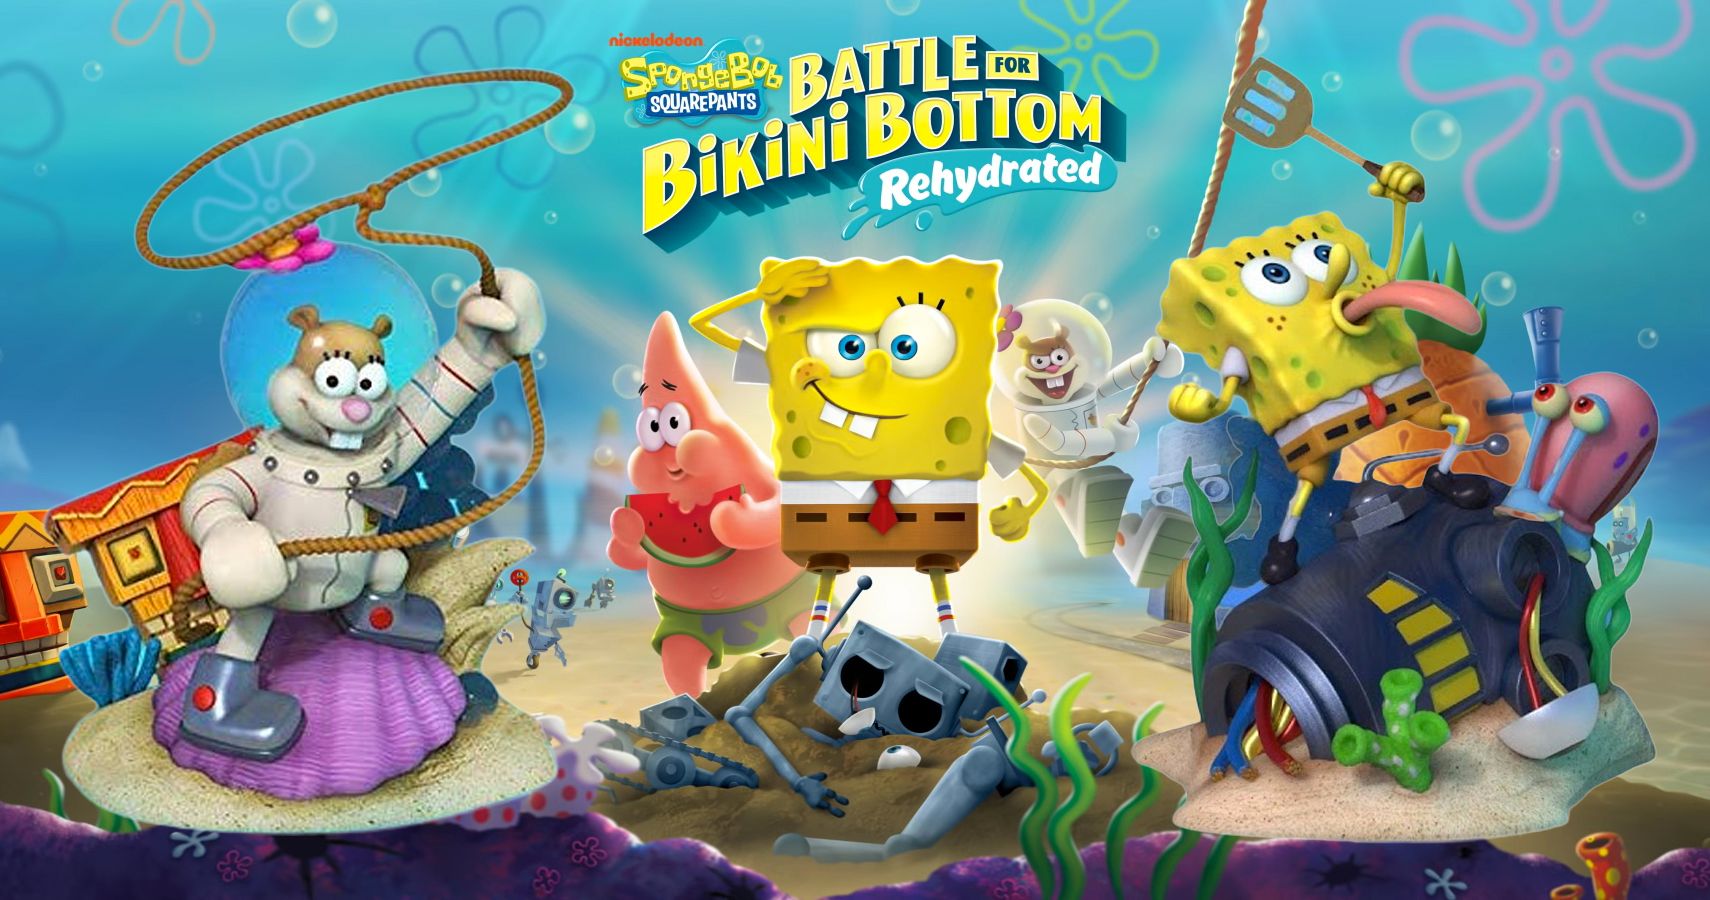 bikini Spongebob sqaurepants battle for